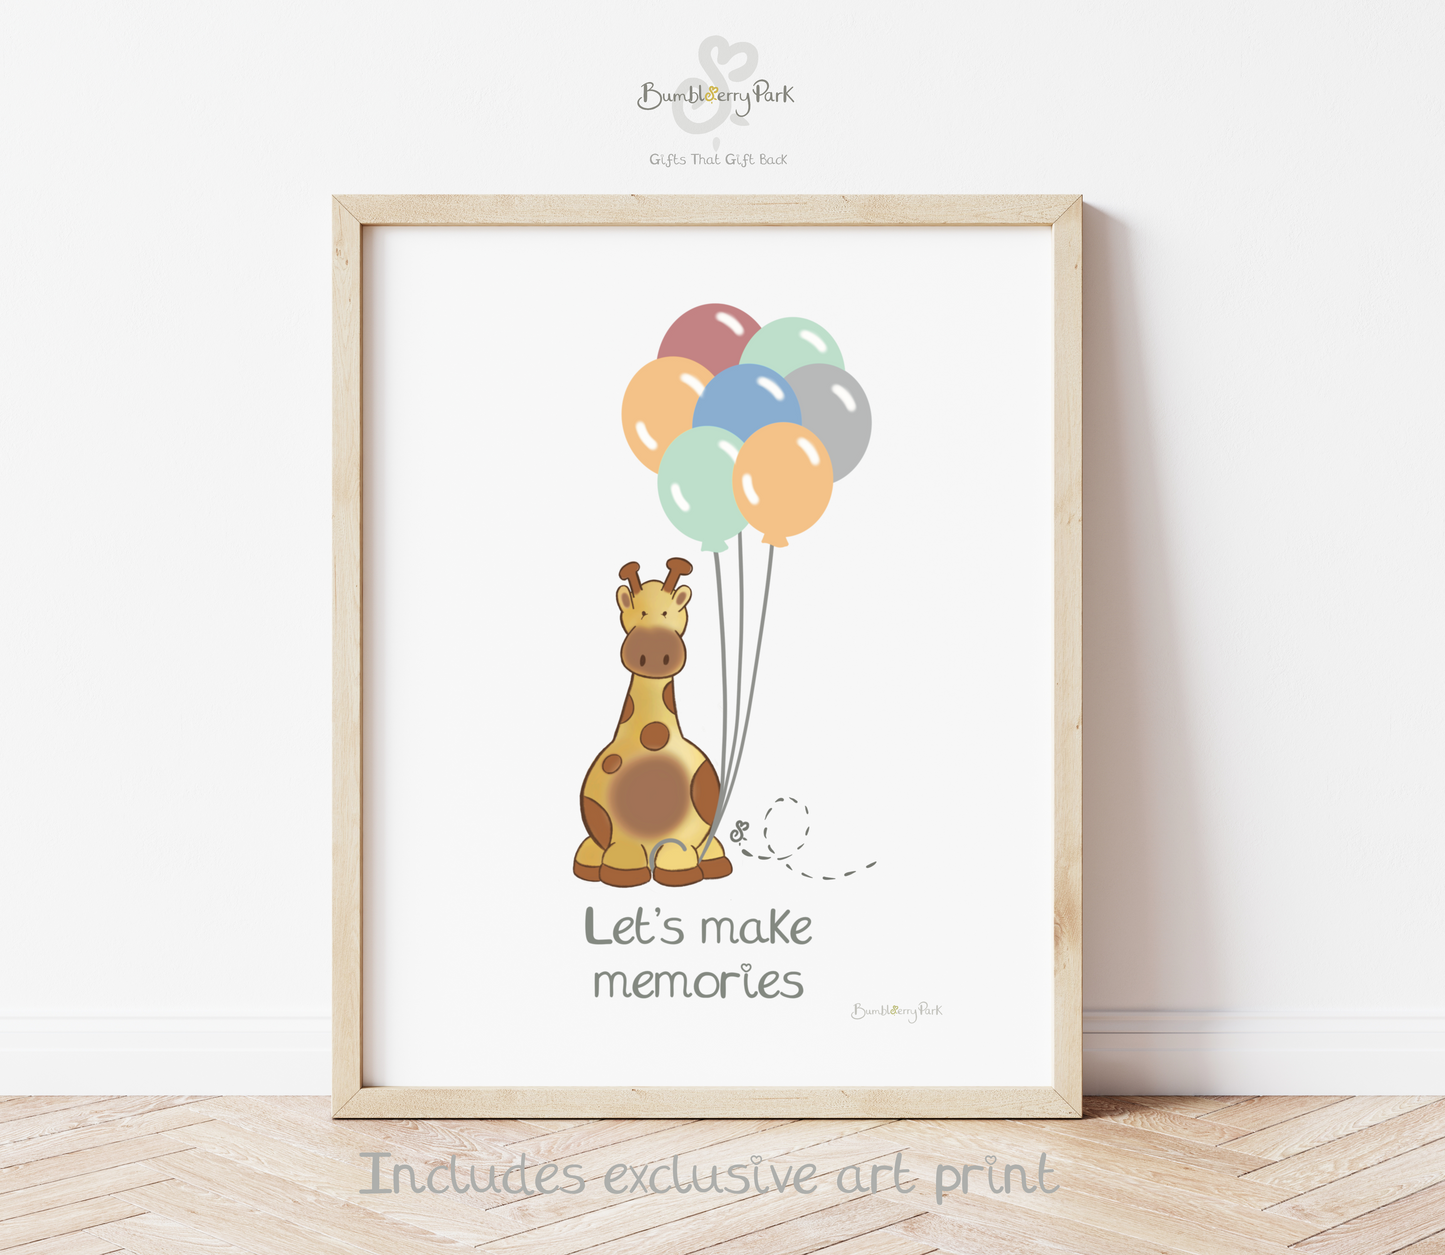 safari giraffe nursery print in wooden frame with "let's make memories" text